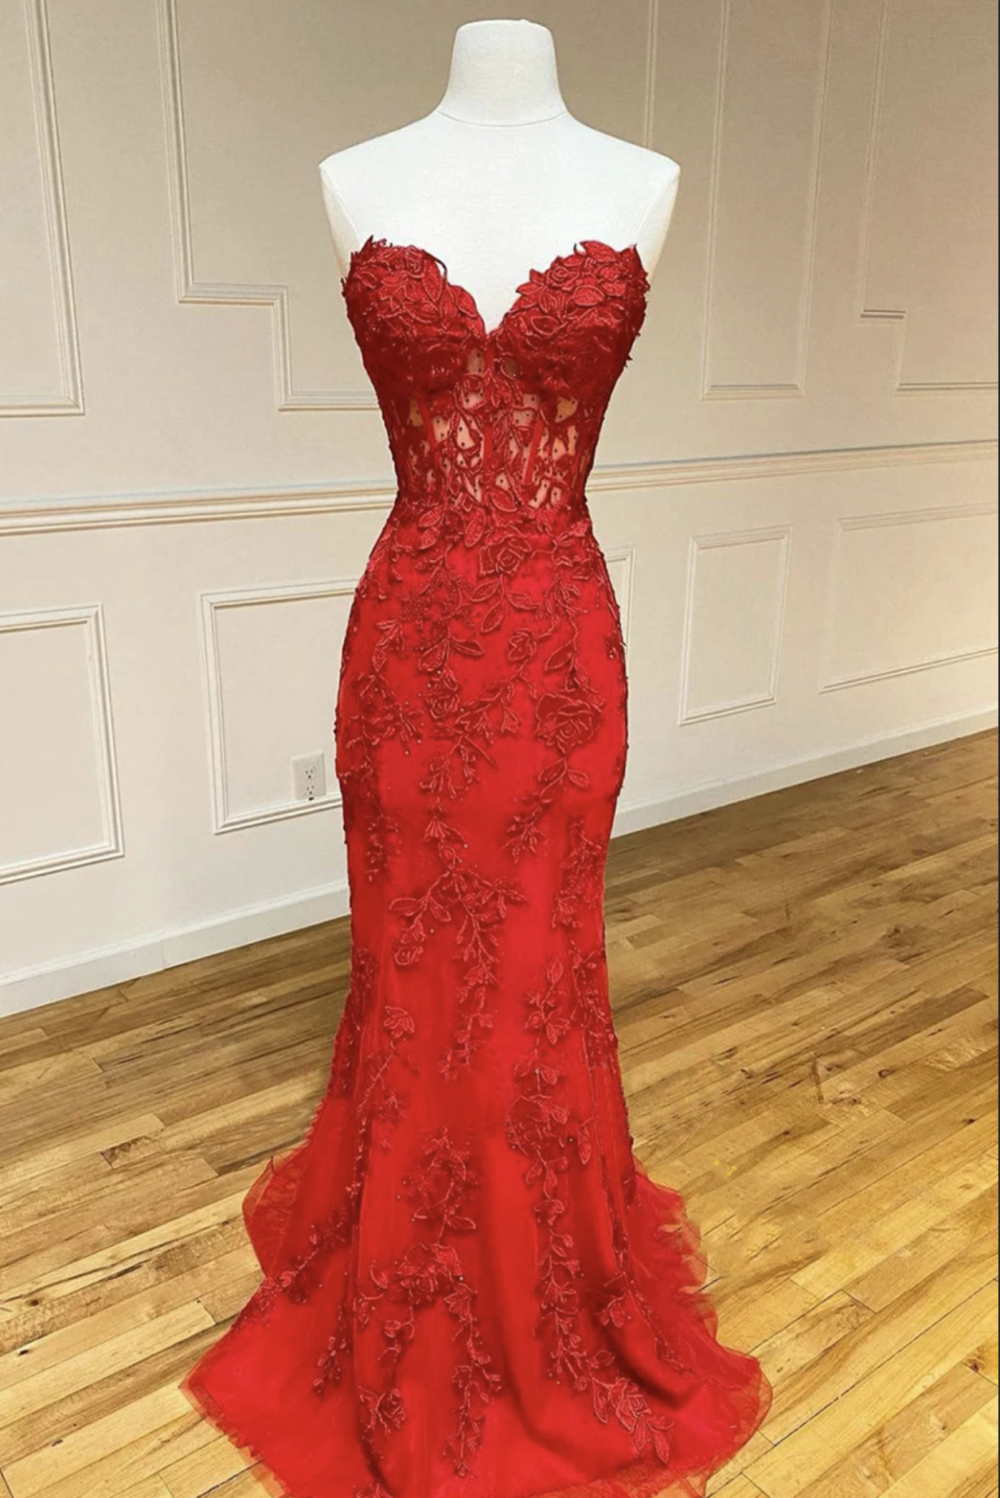 Red Fishtail Dress, Lace Applique Diamond, Heart-shaped Neckline Open Back Tie Up Style Party Dress Long Dress